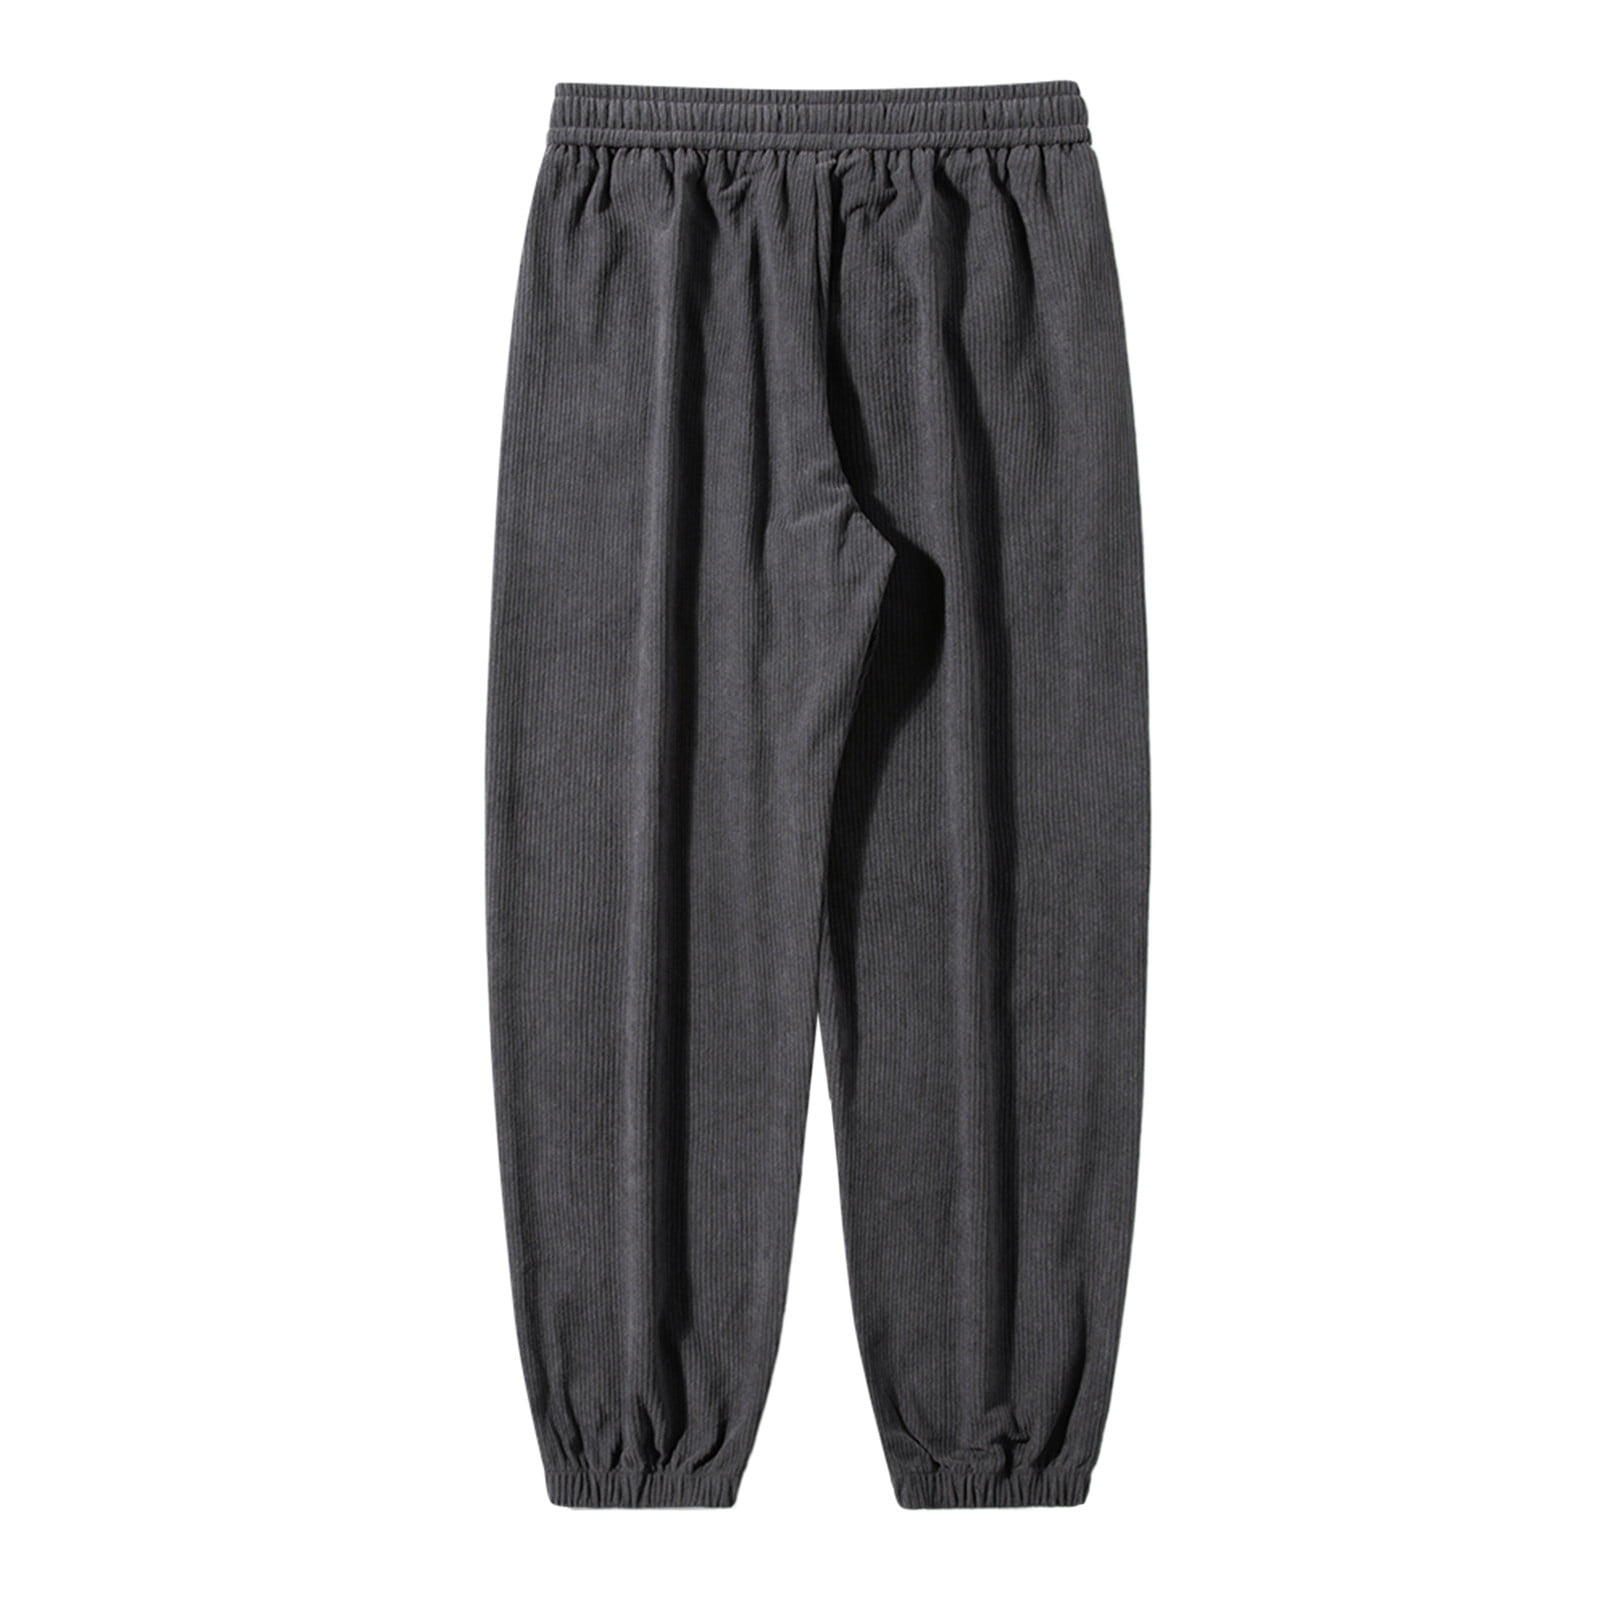 KaLI_store Mens Dress Pants Mens Sweatpants Men Pants Casual Fashion Joggers  Comfortable Basic Pants Sport Daily Workout Pants C,XL 